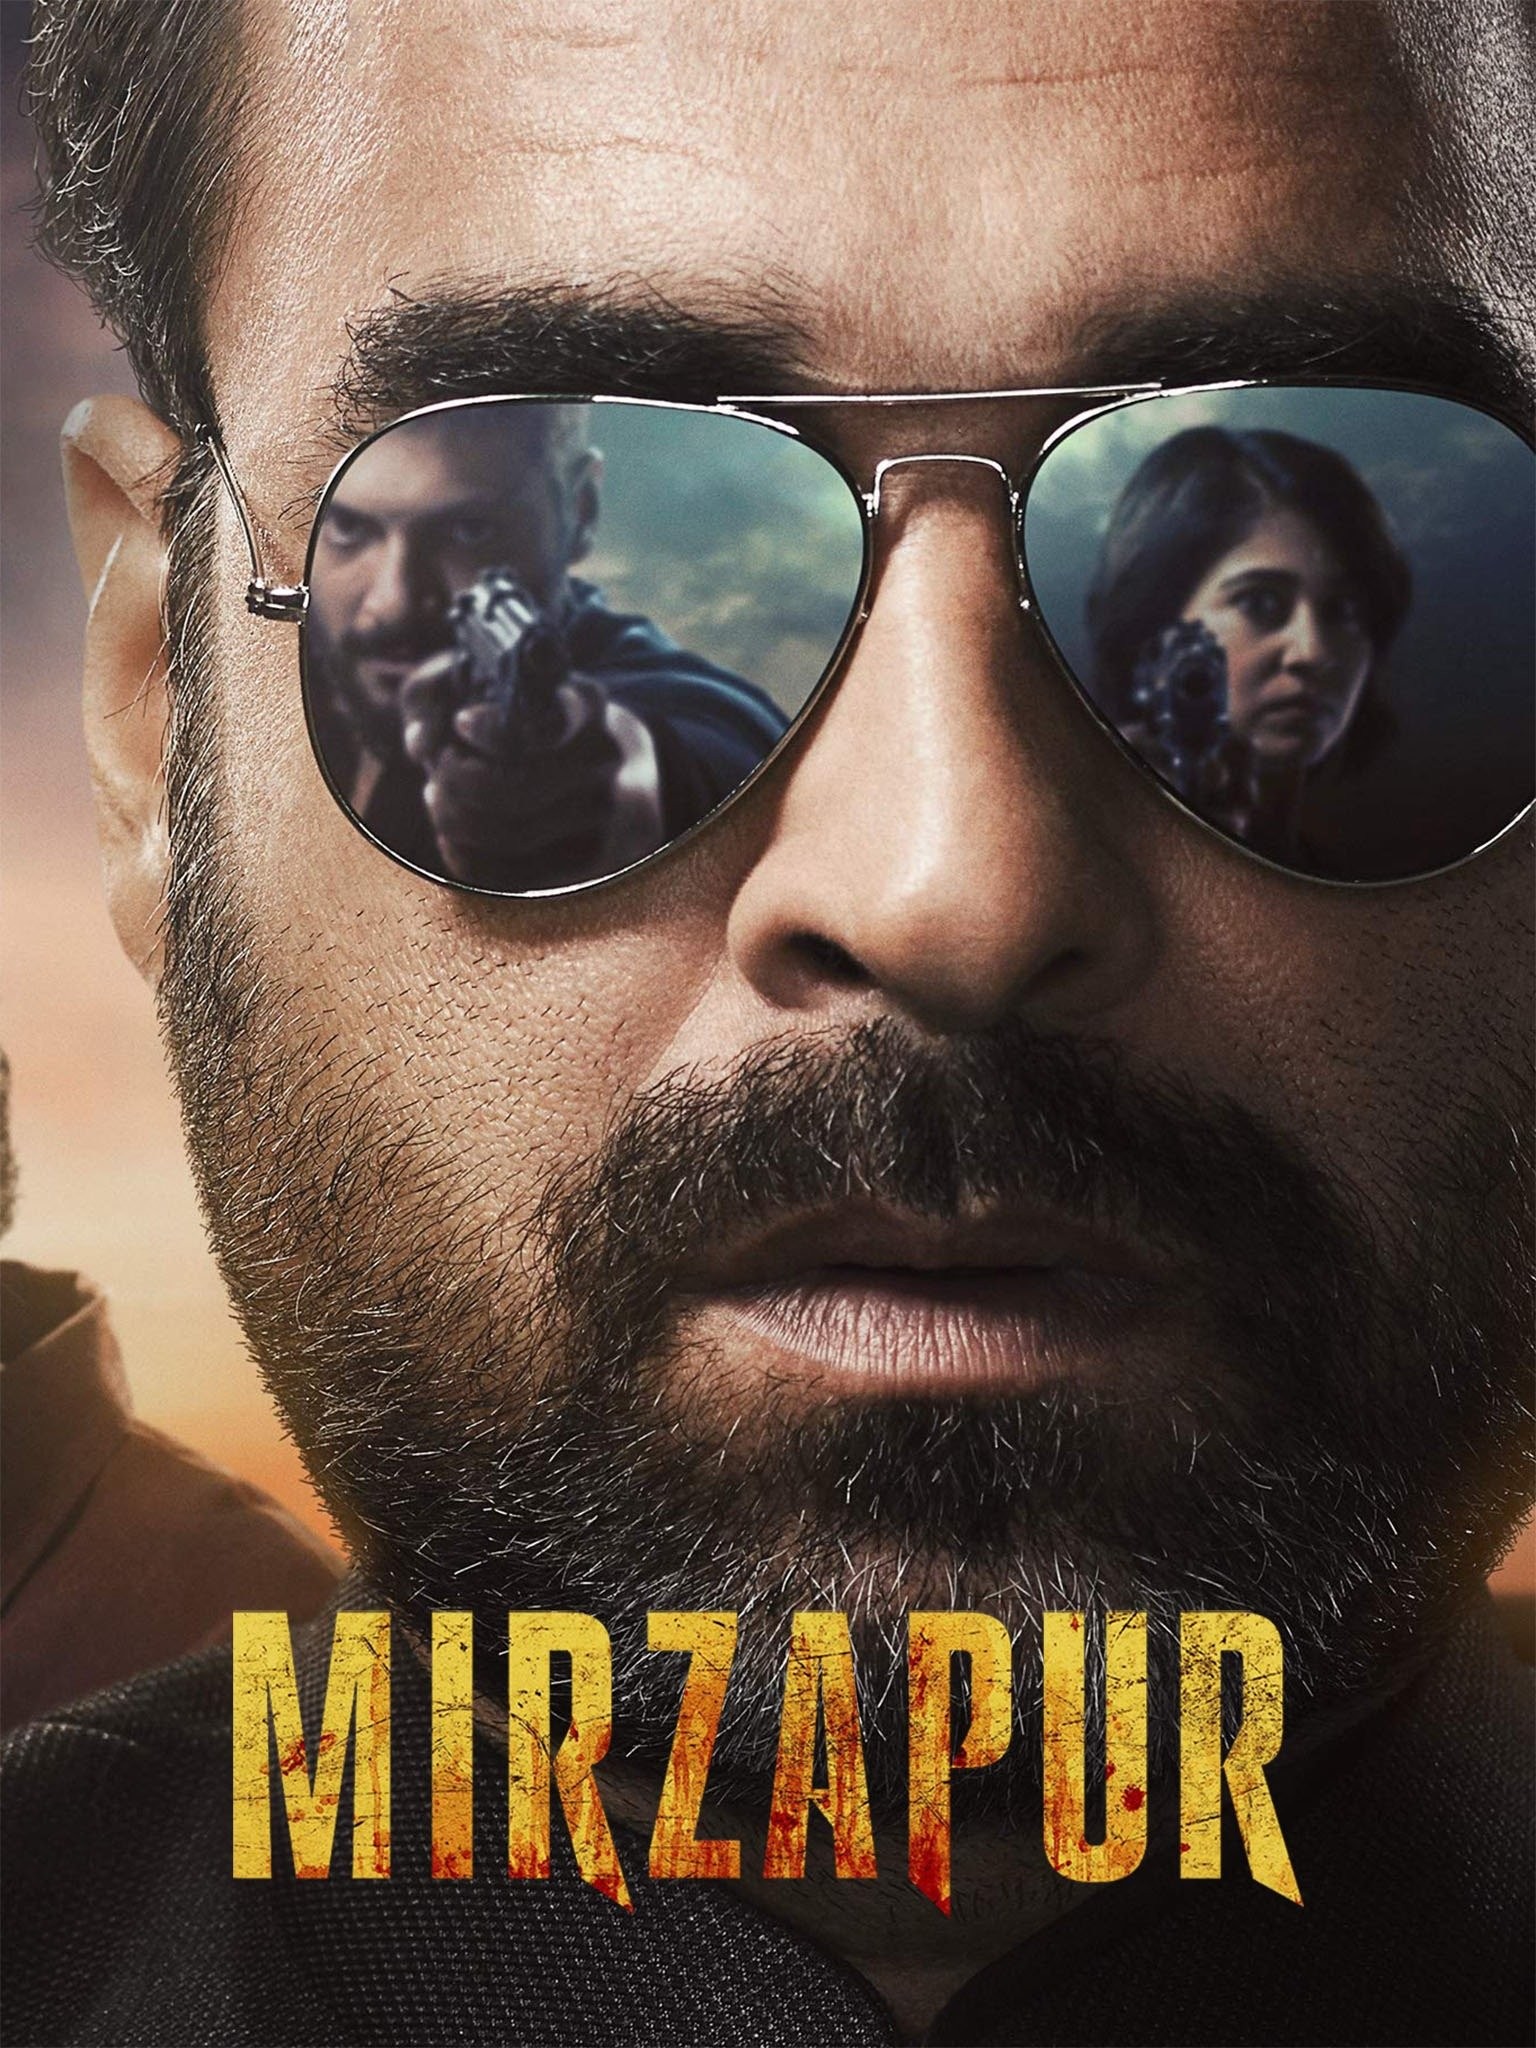 Mirzapur season 2 hindi new movies 2020| episode 2| - video Dailymotion